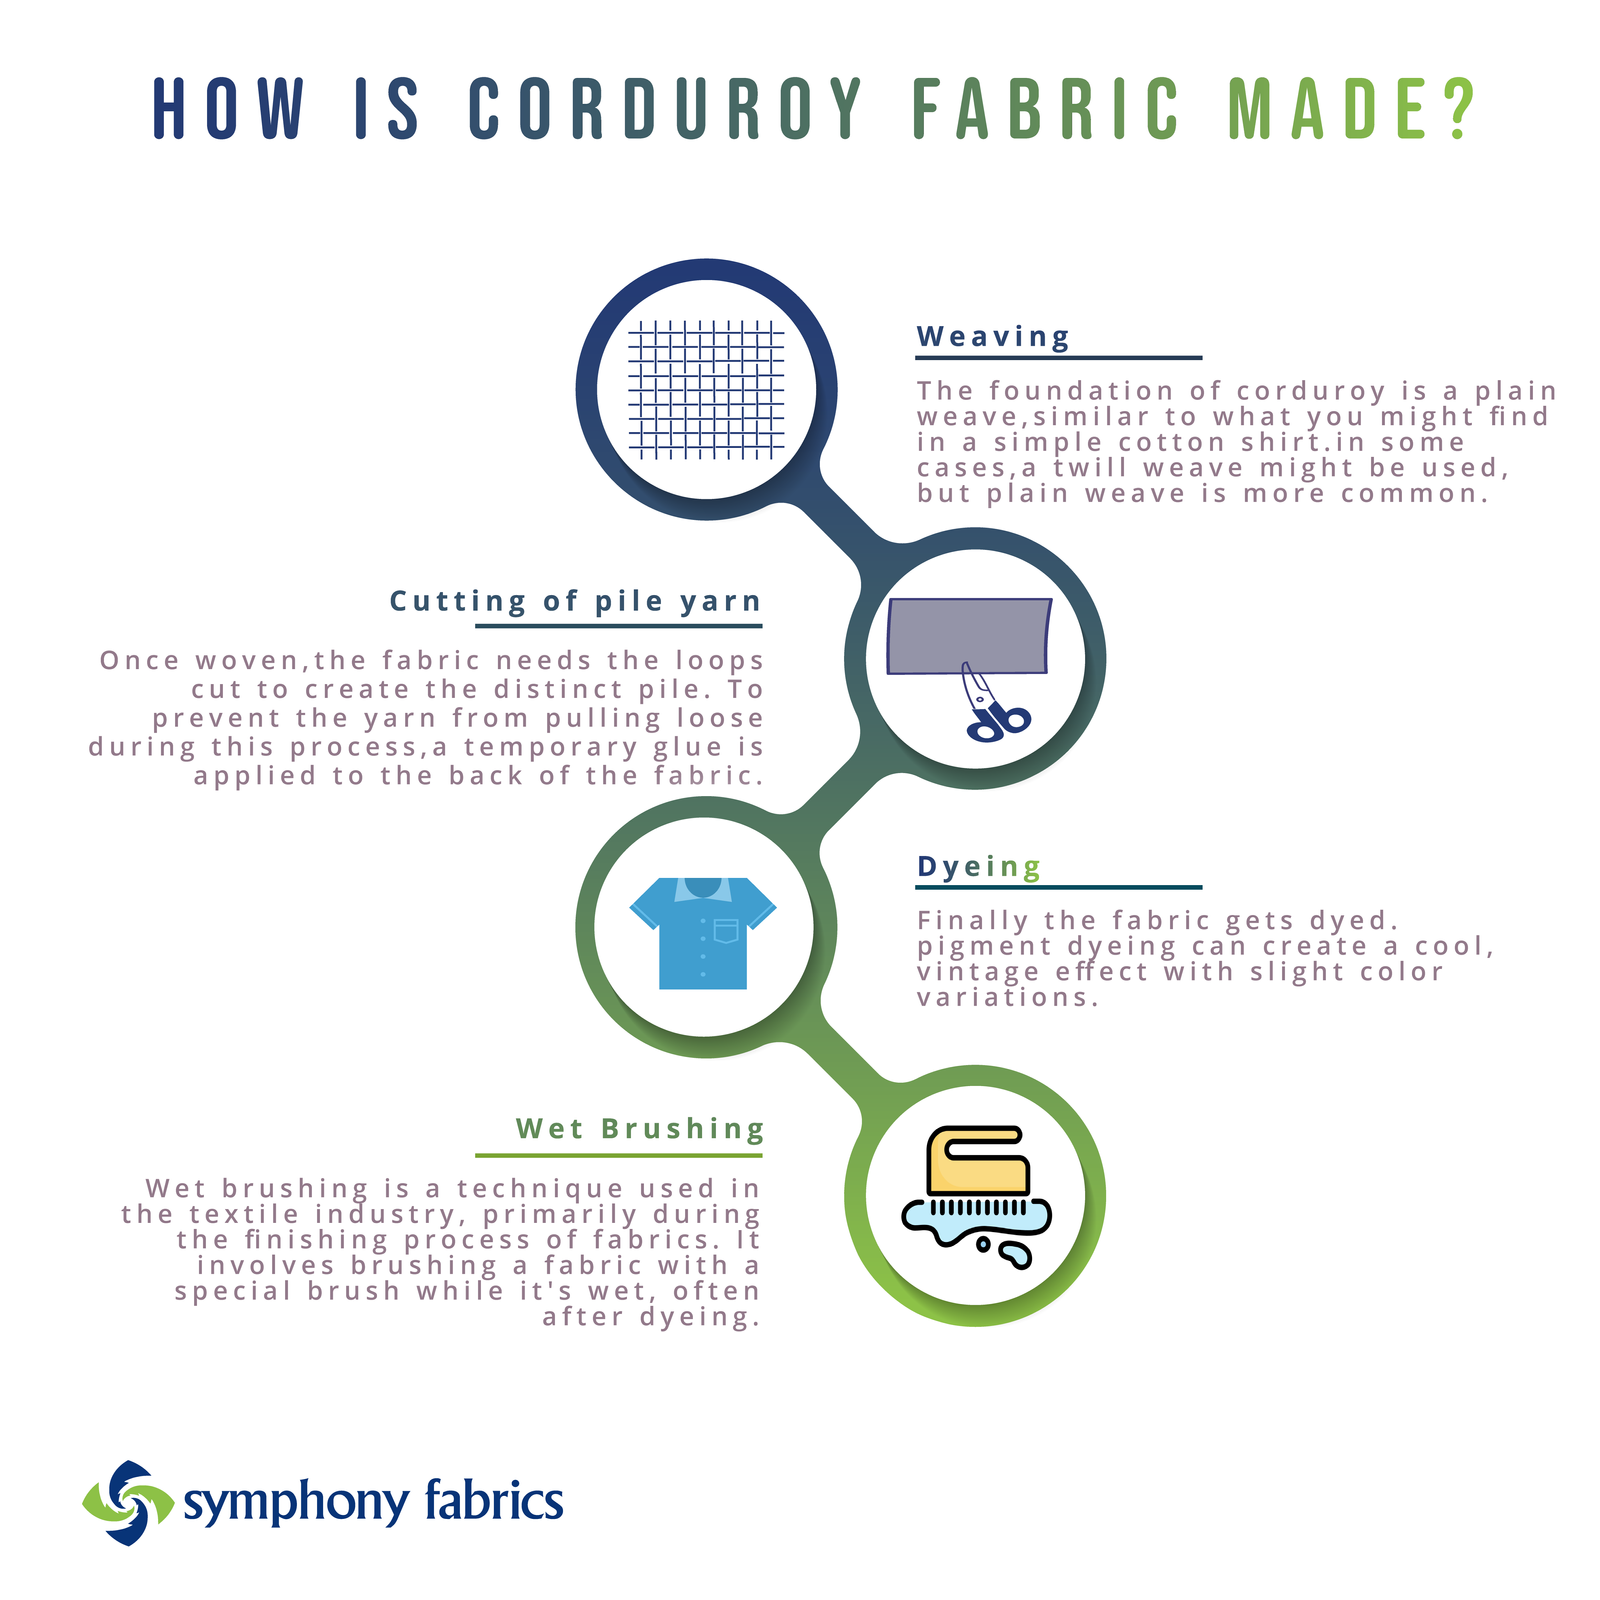 How is Corduroy Fabric Made - Corduroy Fabric